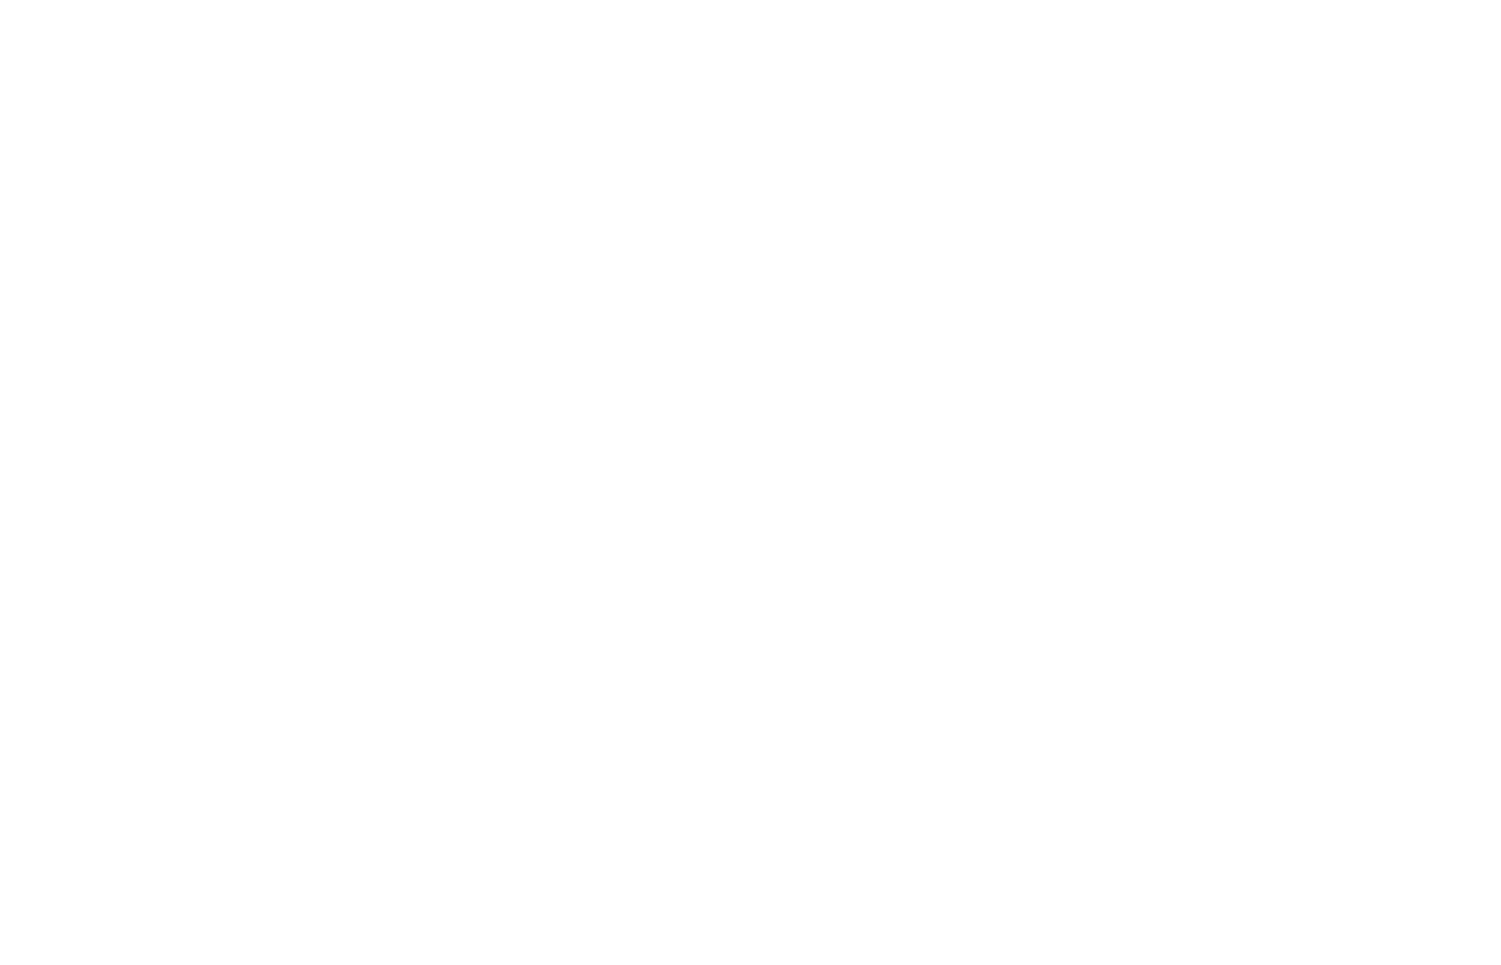 University of South Carolina College of Social Work logo.